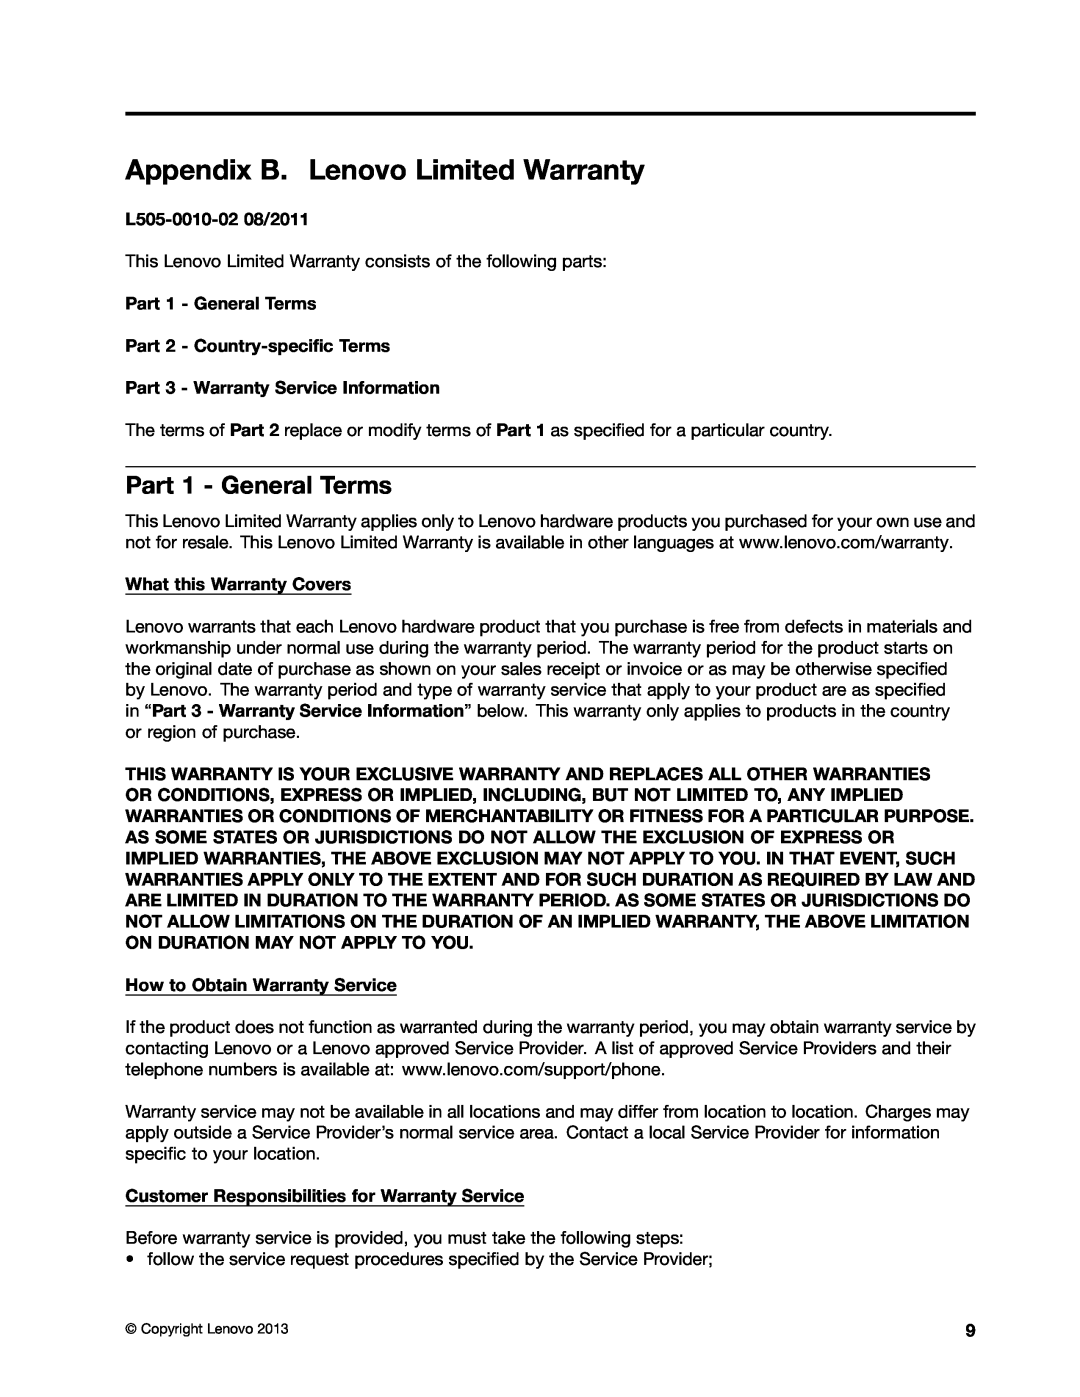 Lenovo 0C22230, 0C22235 manual Appendix B. Lenovo Limited Warranty, Part 1 - General Terms, L505-0010-02 08/2011 